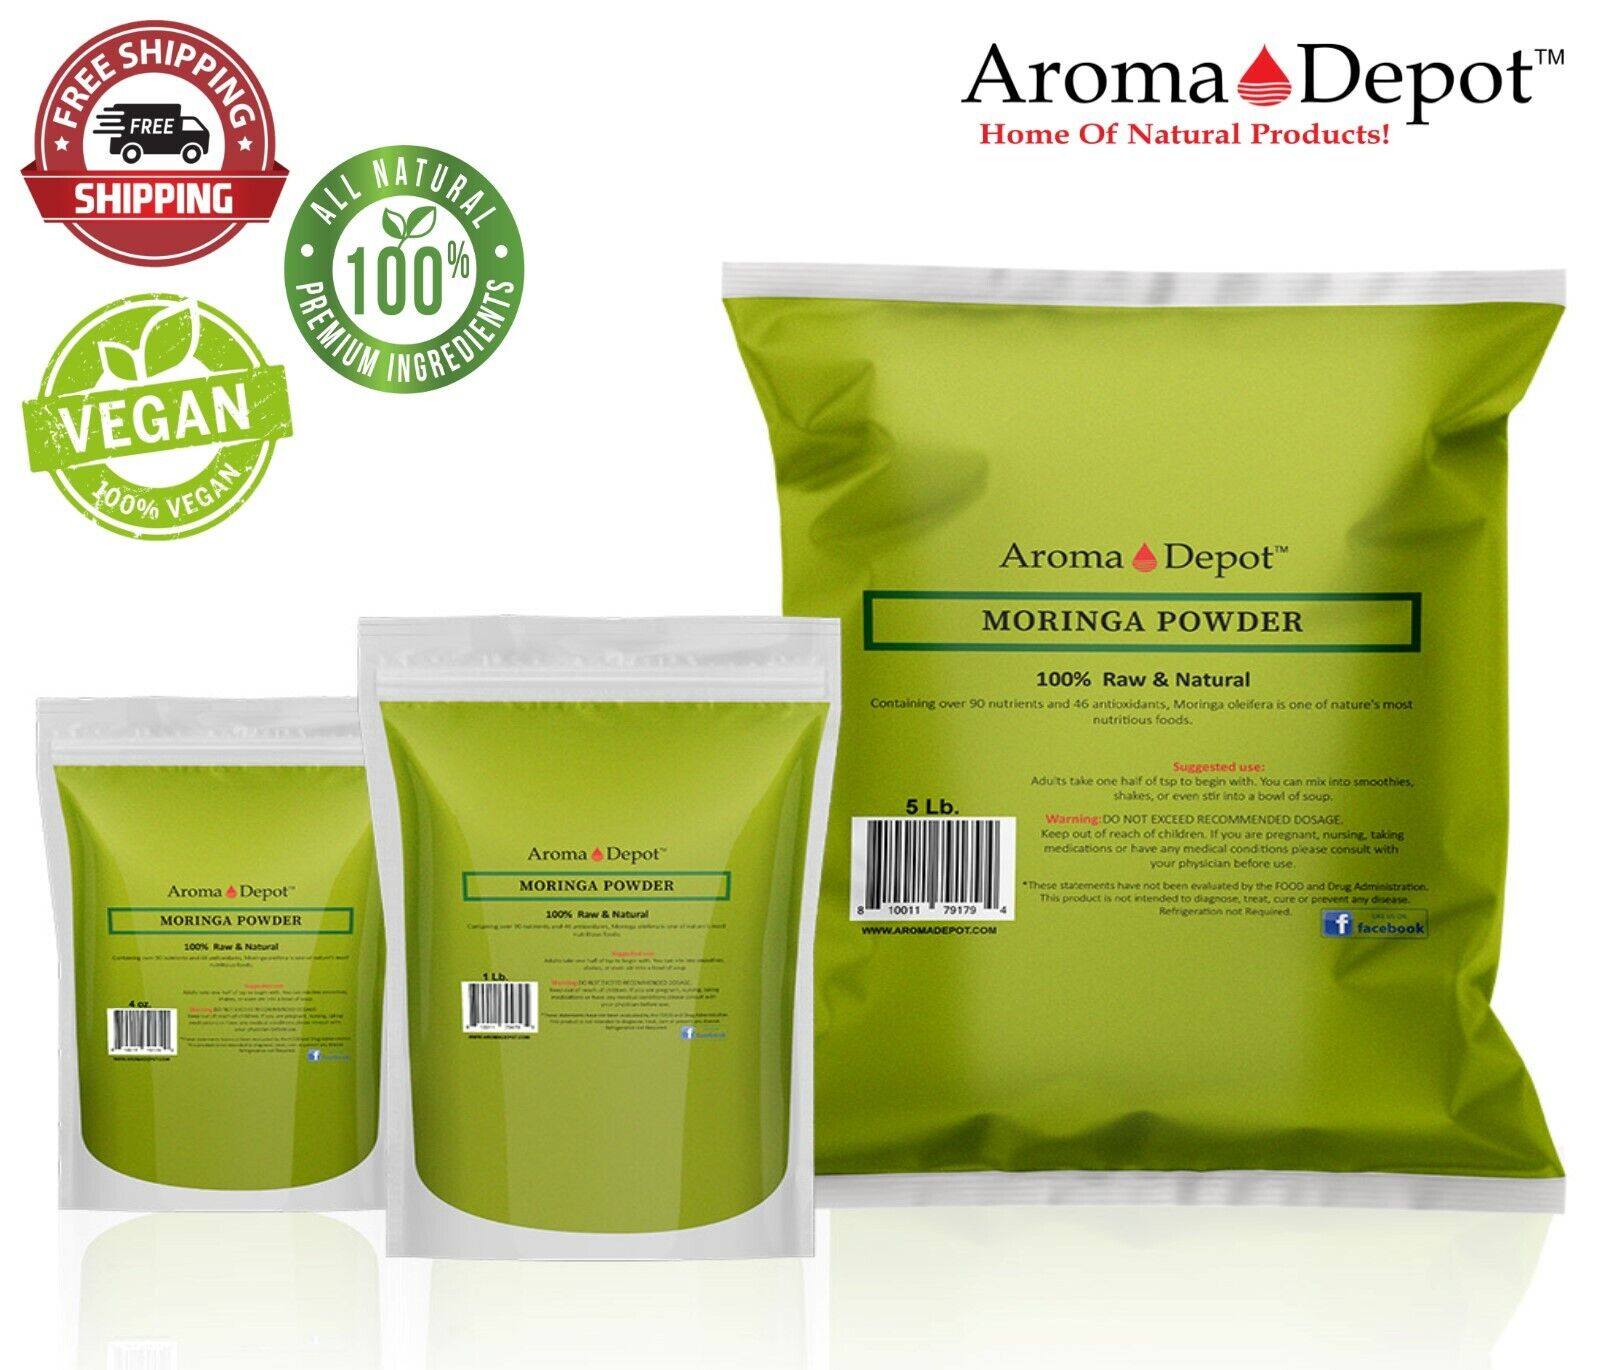 Moringa oleifera Leaf Powder 100% Pure Natural Superfood Gluten Free Lot 